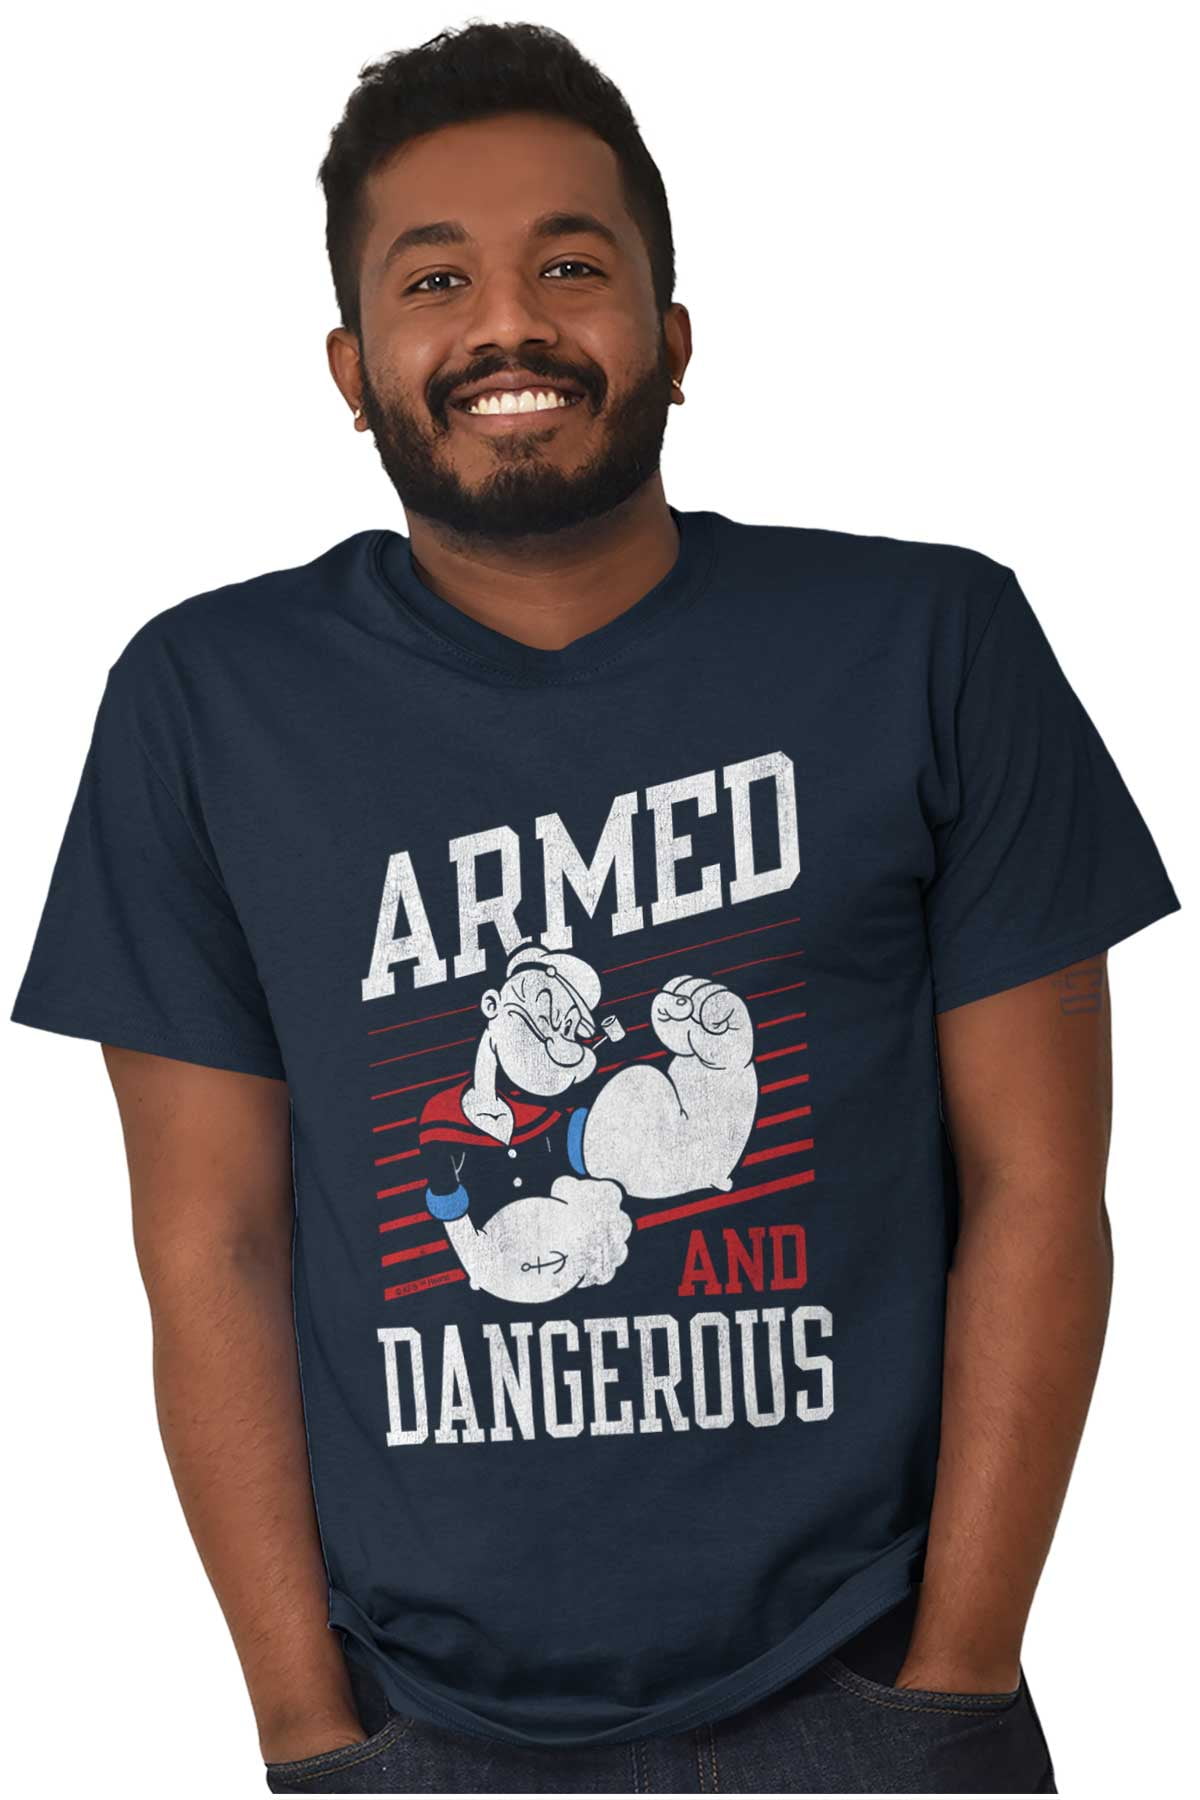 Popeye Armed Dangerous Biceps Workout Women's T Shirt Ladies Tee